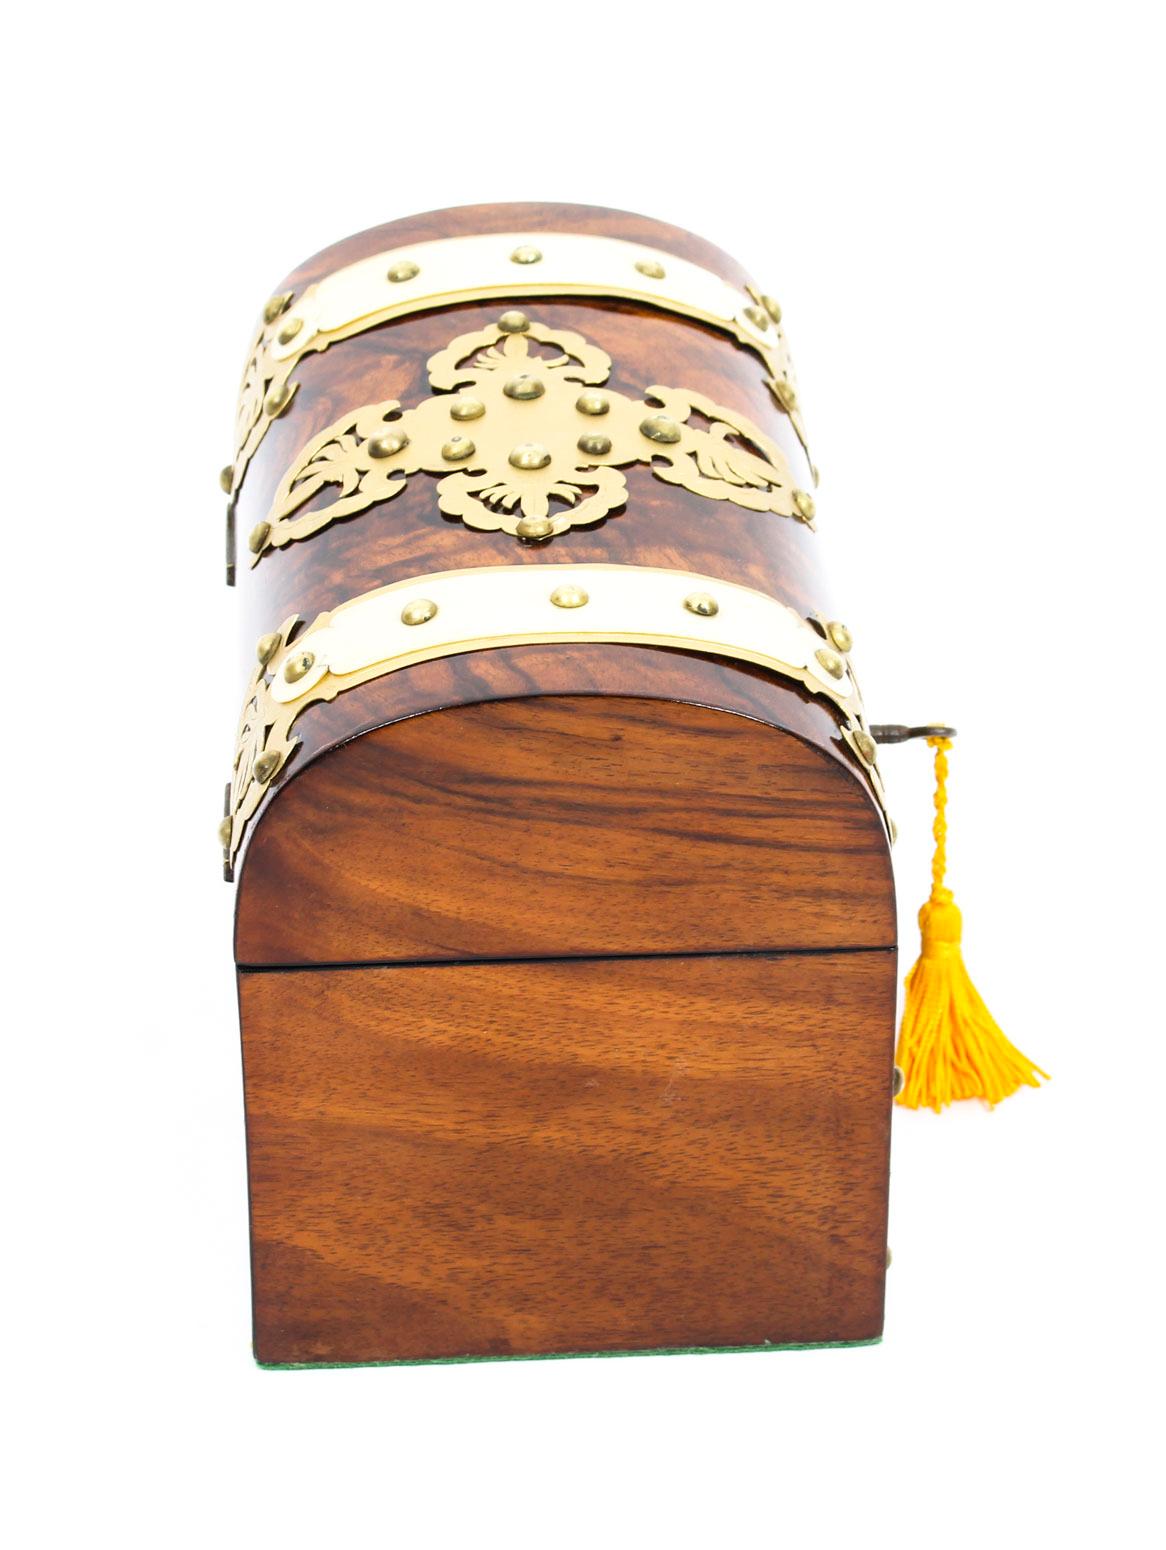 Antique Burr Walnut, Ivorine and Brass Box Casket with Key, 19th Century 4